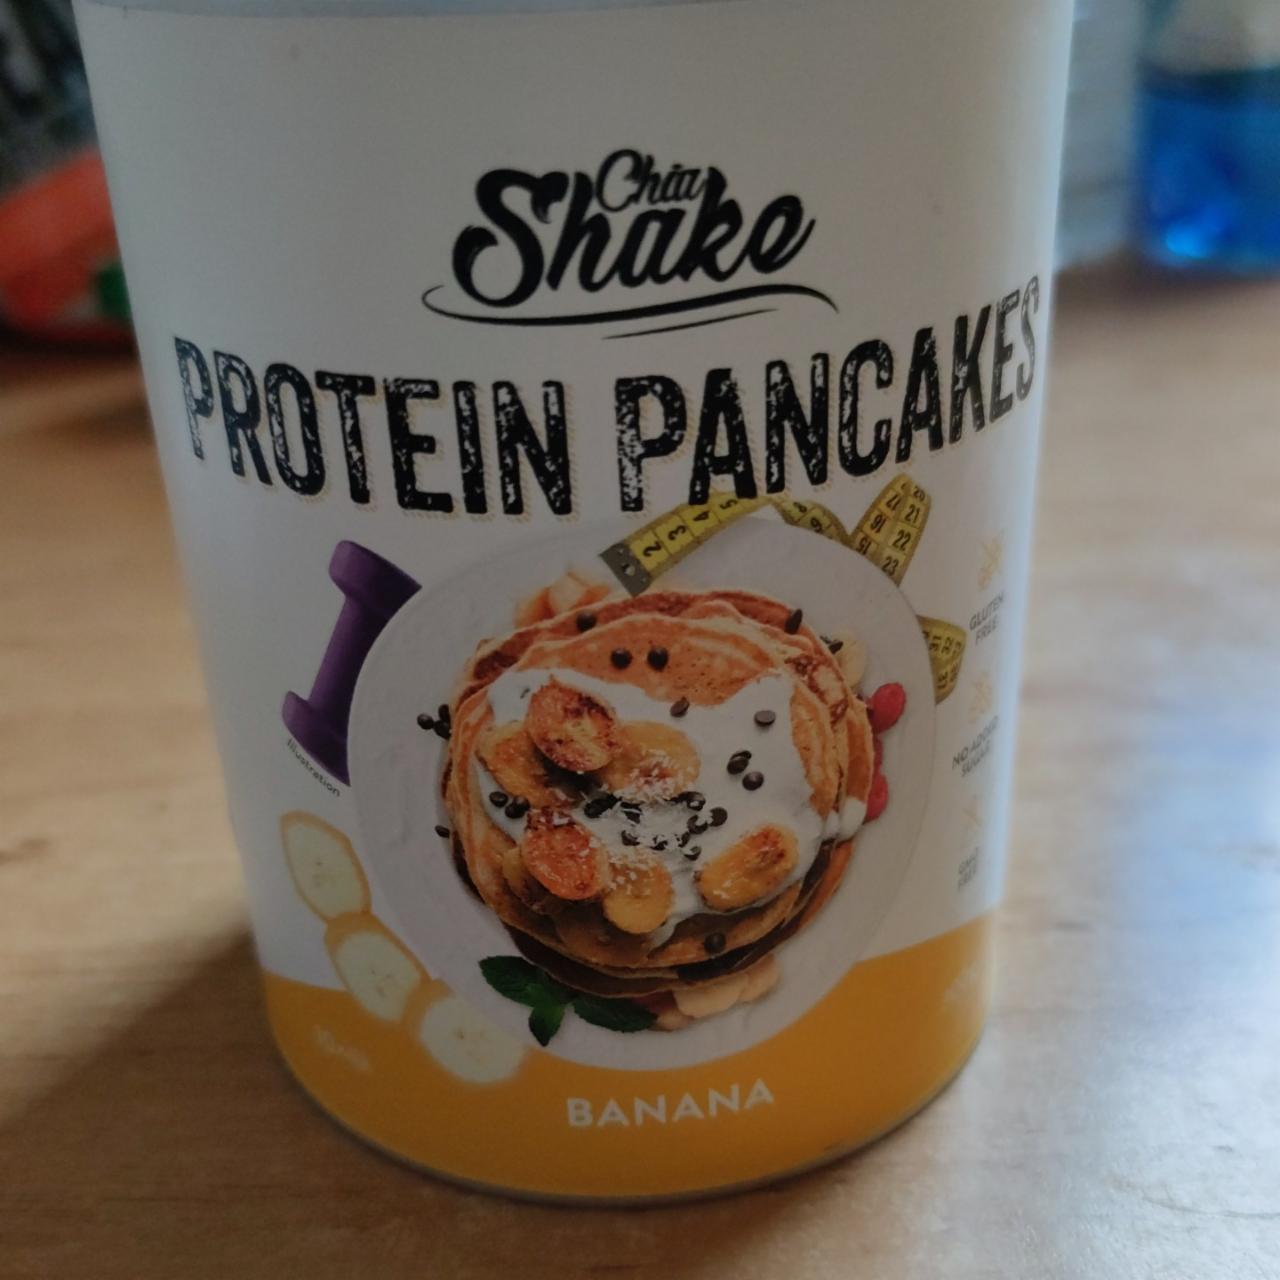 Fotografie - Protein pancakes Banana Chia shake